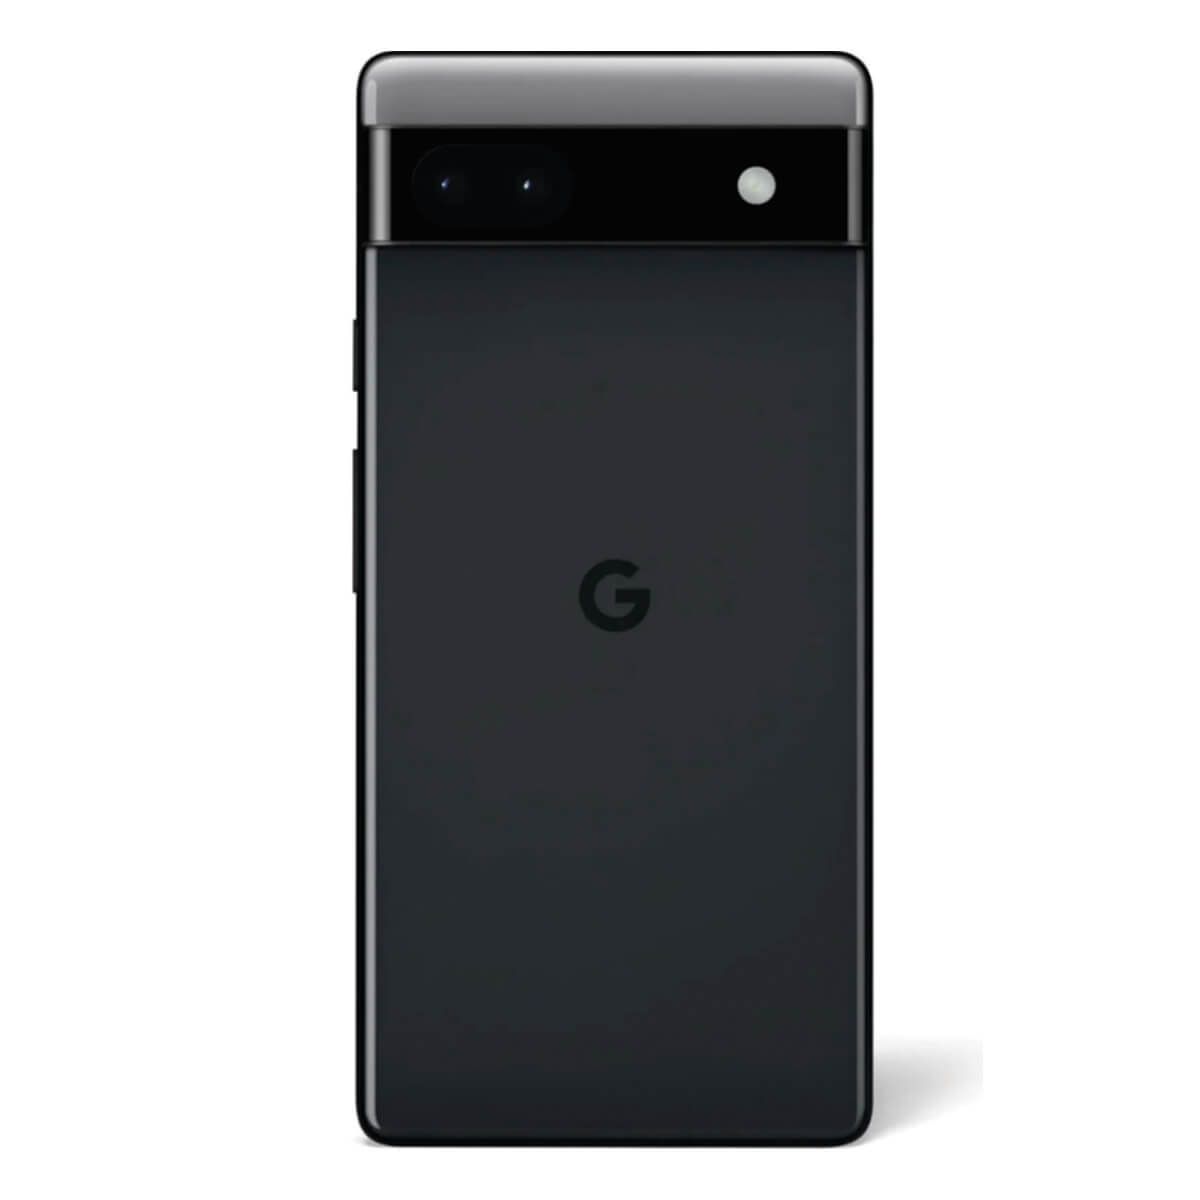 Google Pixel 6a 5G 6 Go/128 Go Noir (Noir anthracite) G1AZG